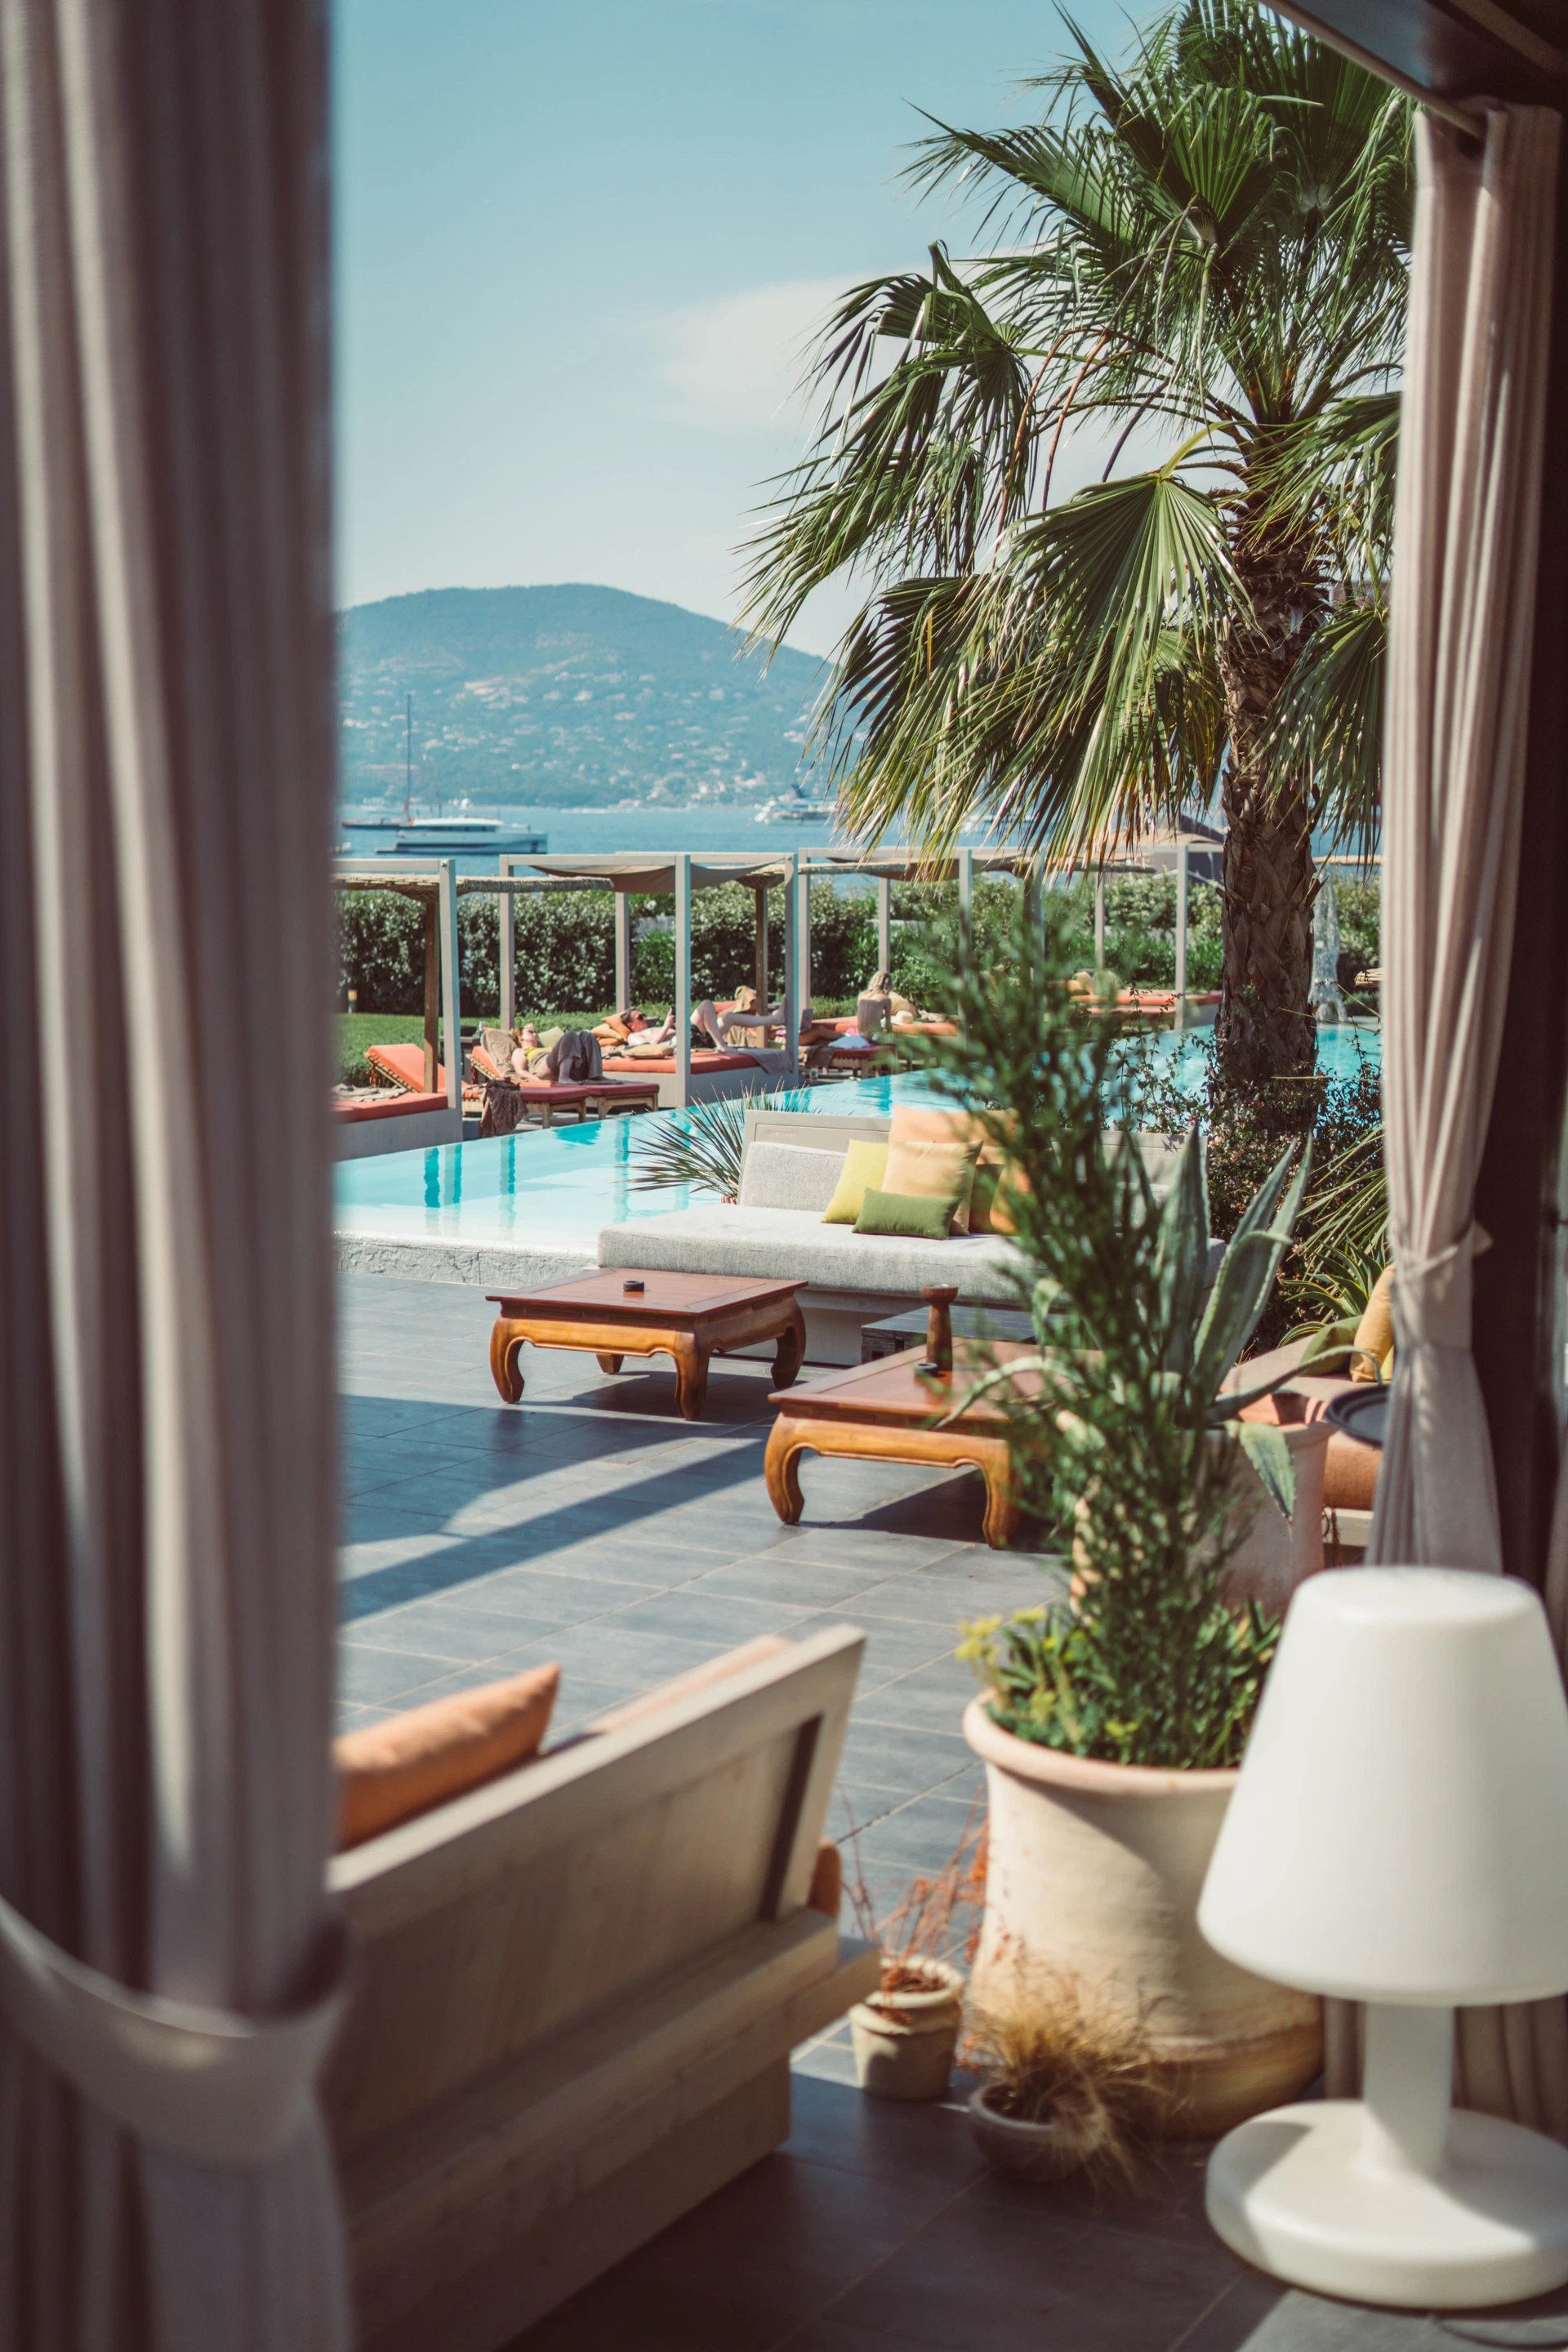 XL Pool - Kube Hotel Saint-Tropez - French Riviera